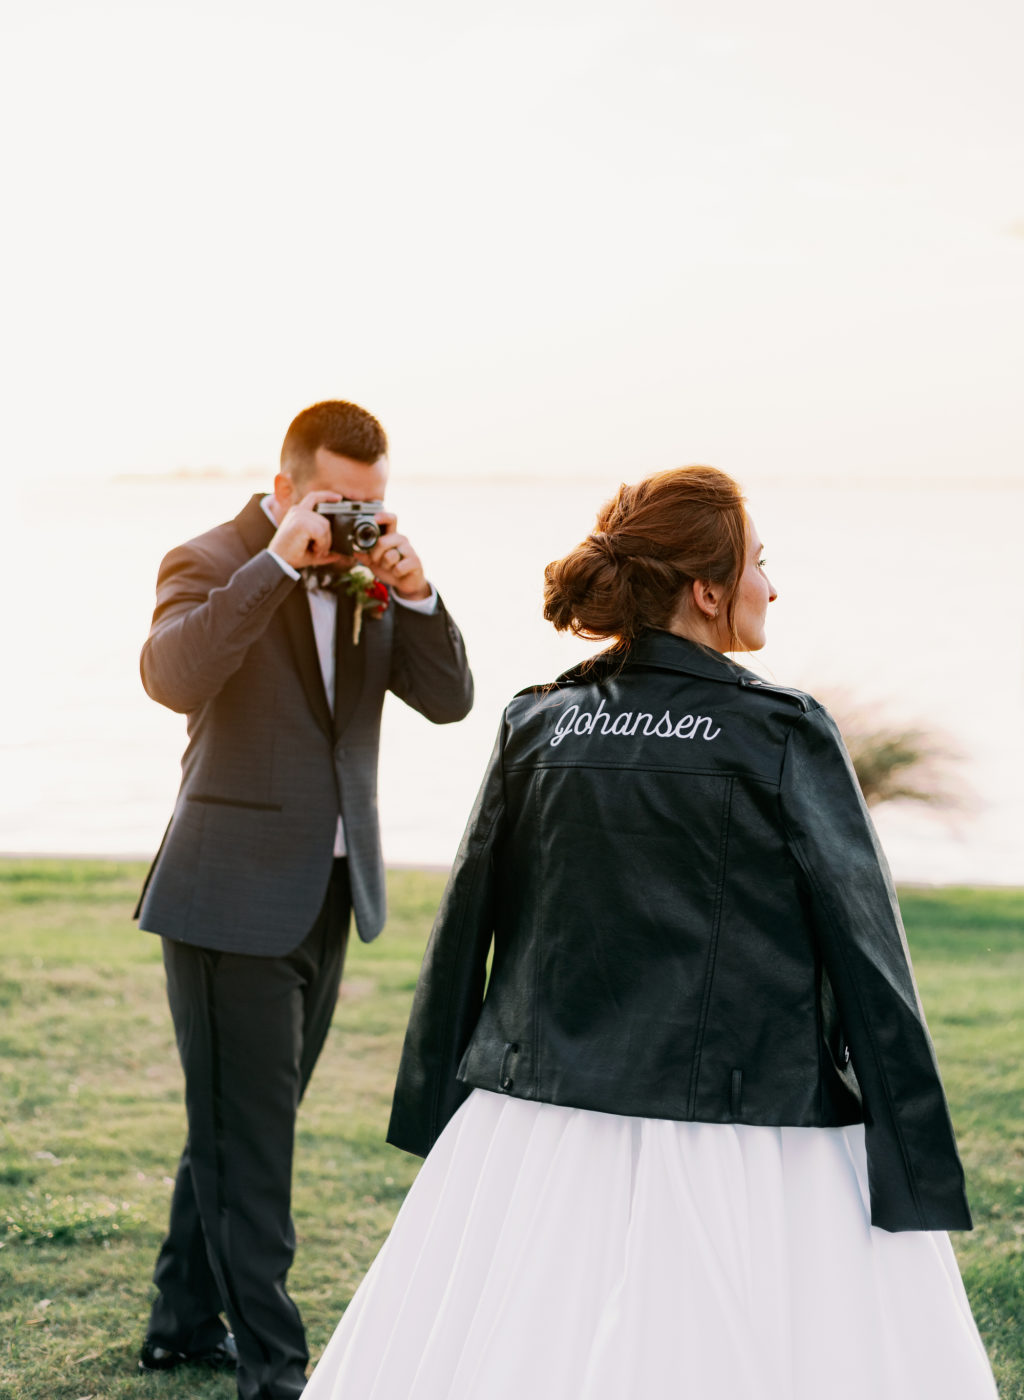 Bride and Groom Portrait with Personalized Custom Leather Jacket | Tampa Bay Wedding Photographer Dewitt for Love Photography | Sarasota Wedding Venue Powel Crosley Estate